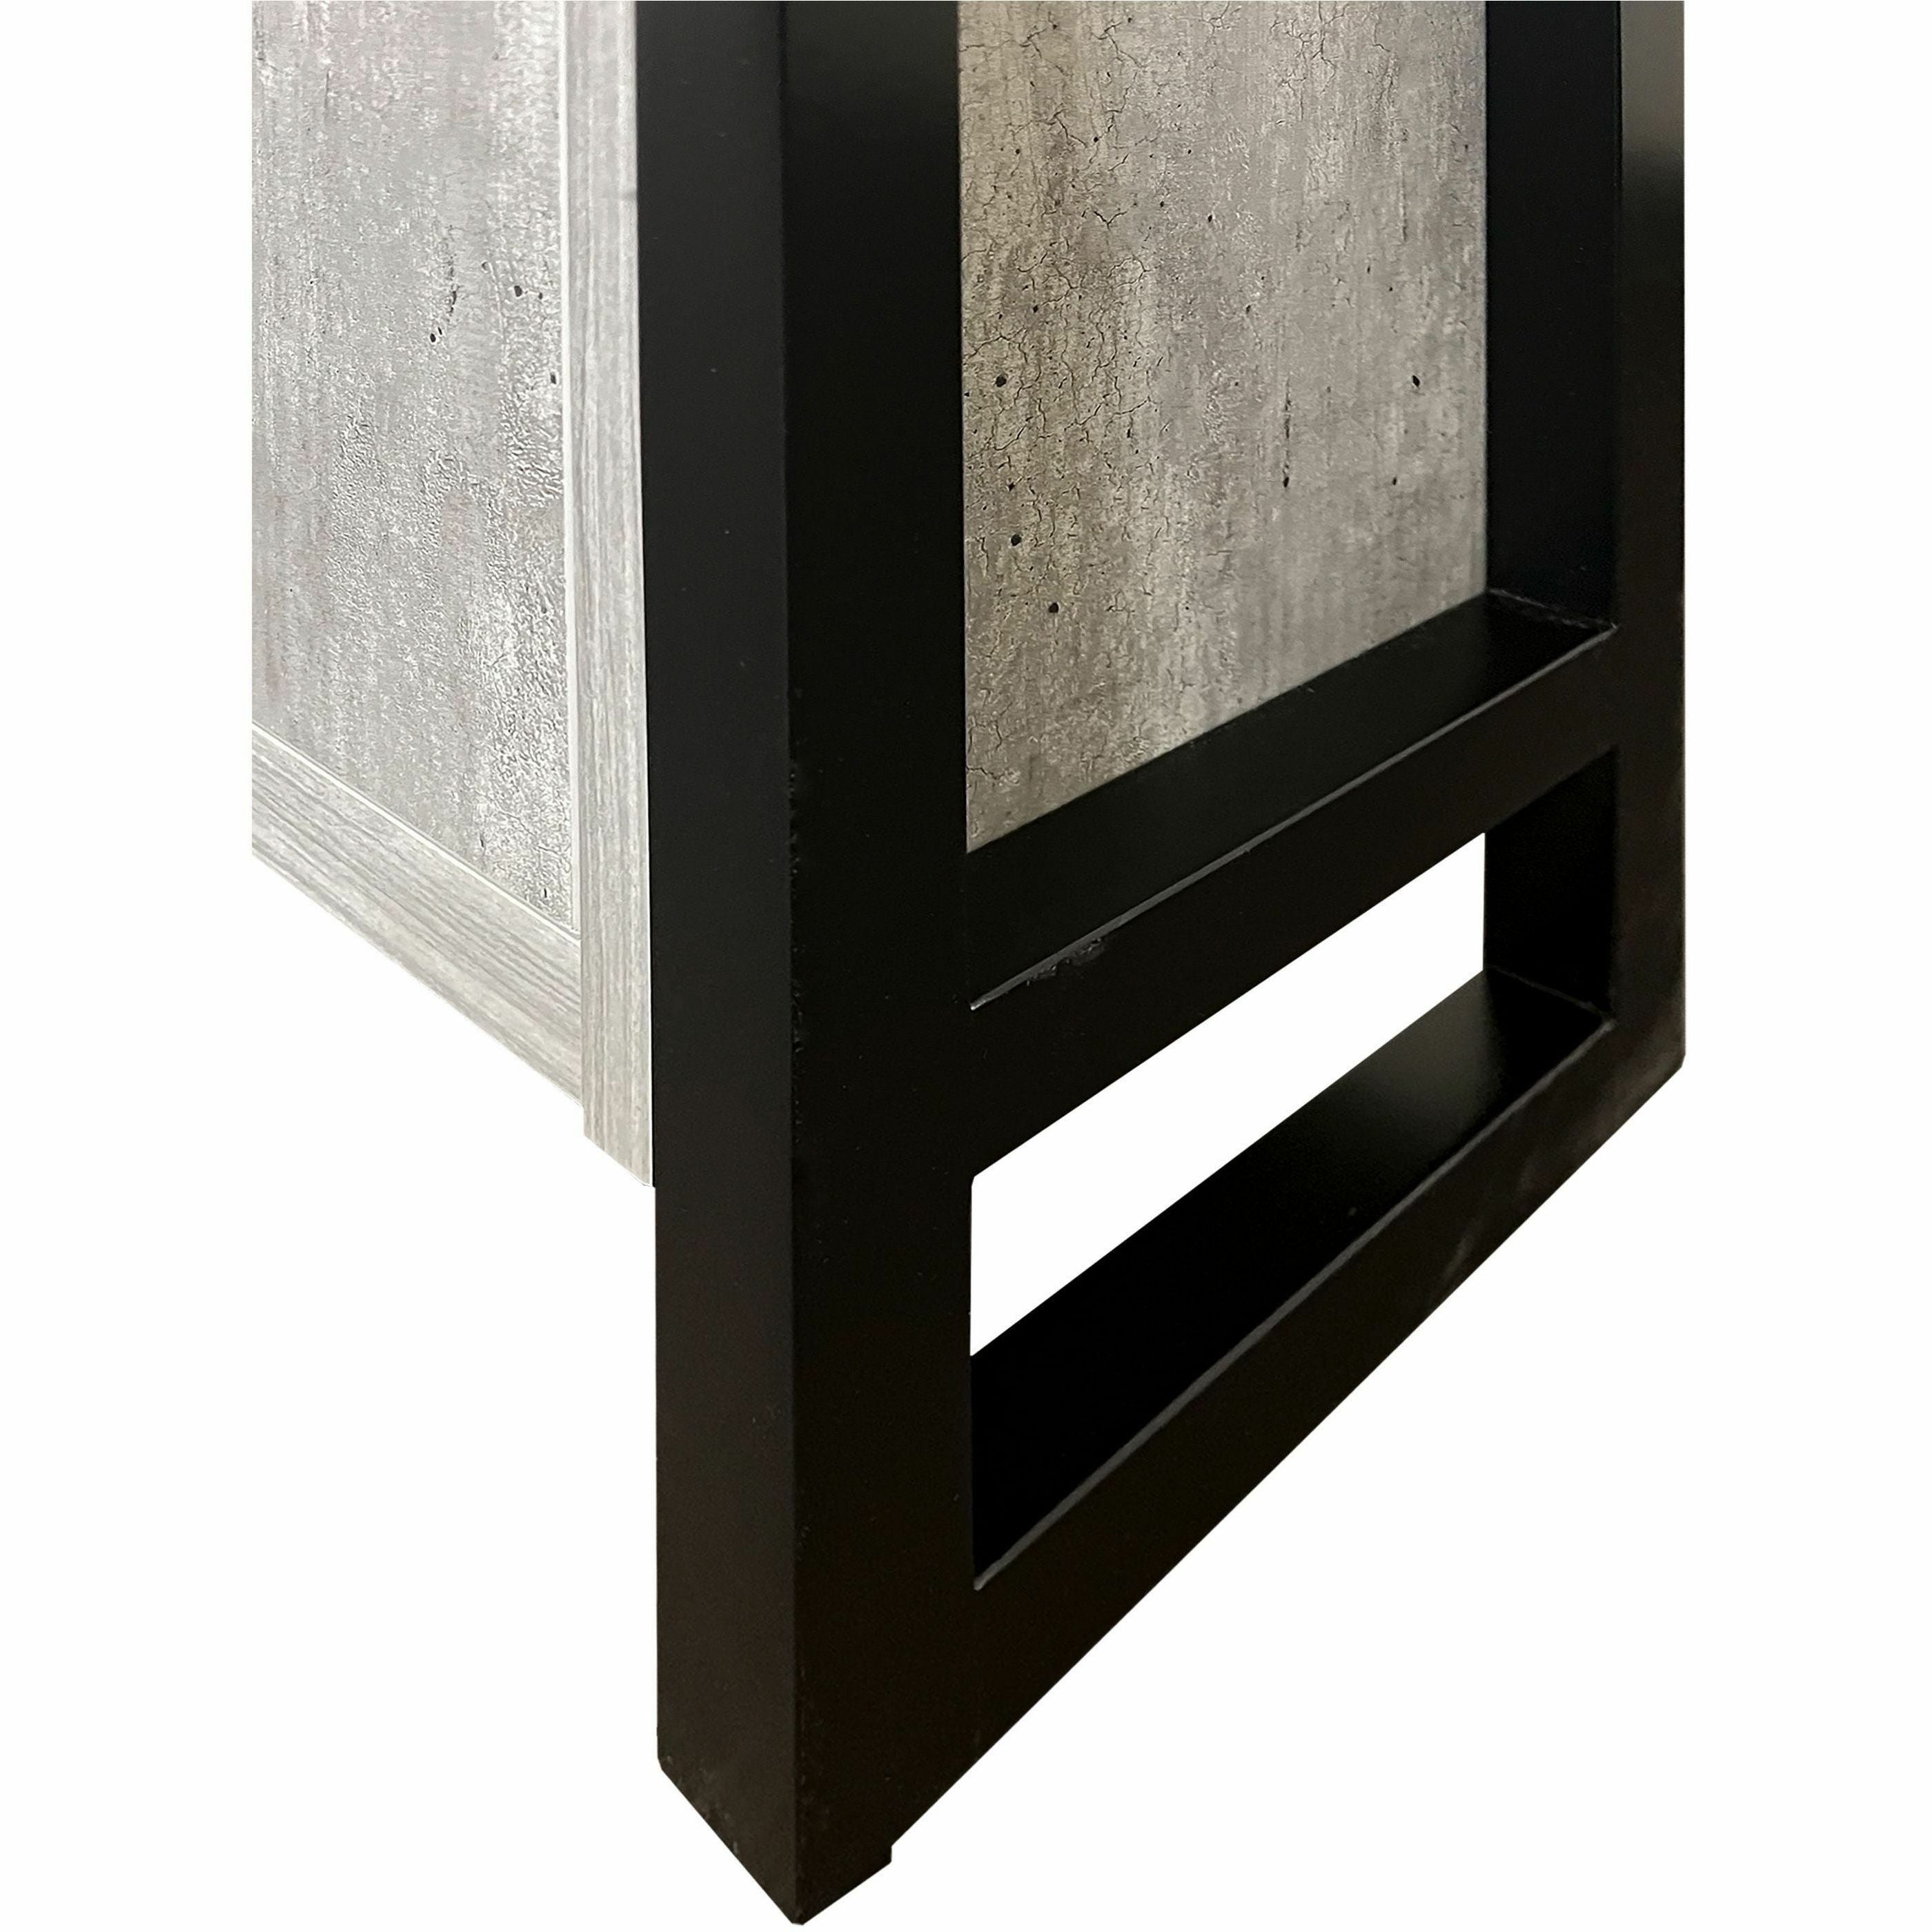 martin-mason-concrete-laminate-unit-36-x-12-x-78-2-x-doors-storage-cabinet-adjustable-shelf-dark-bronze-stone-concrete-laminate_mrtmnc3678d - 2